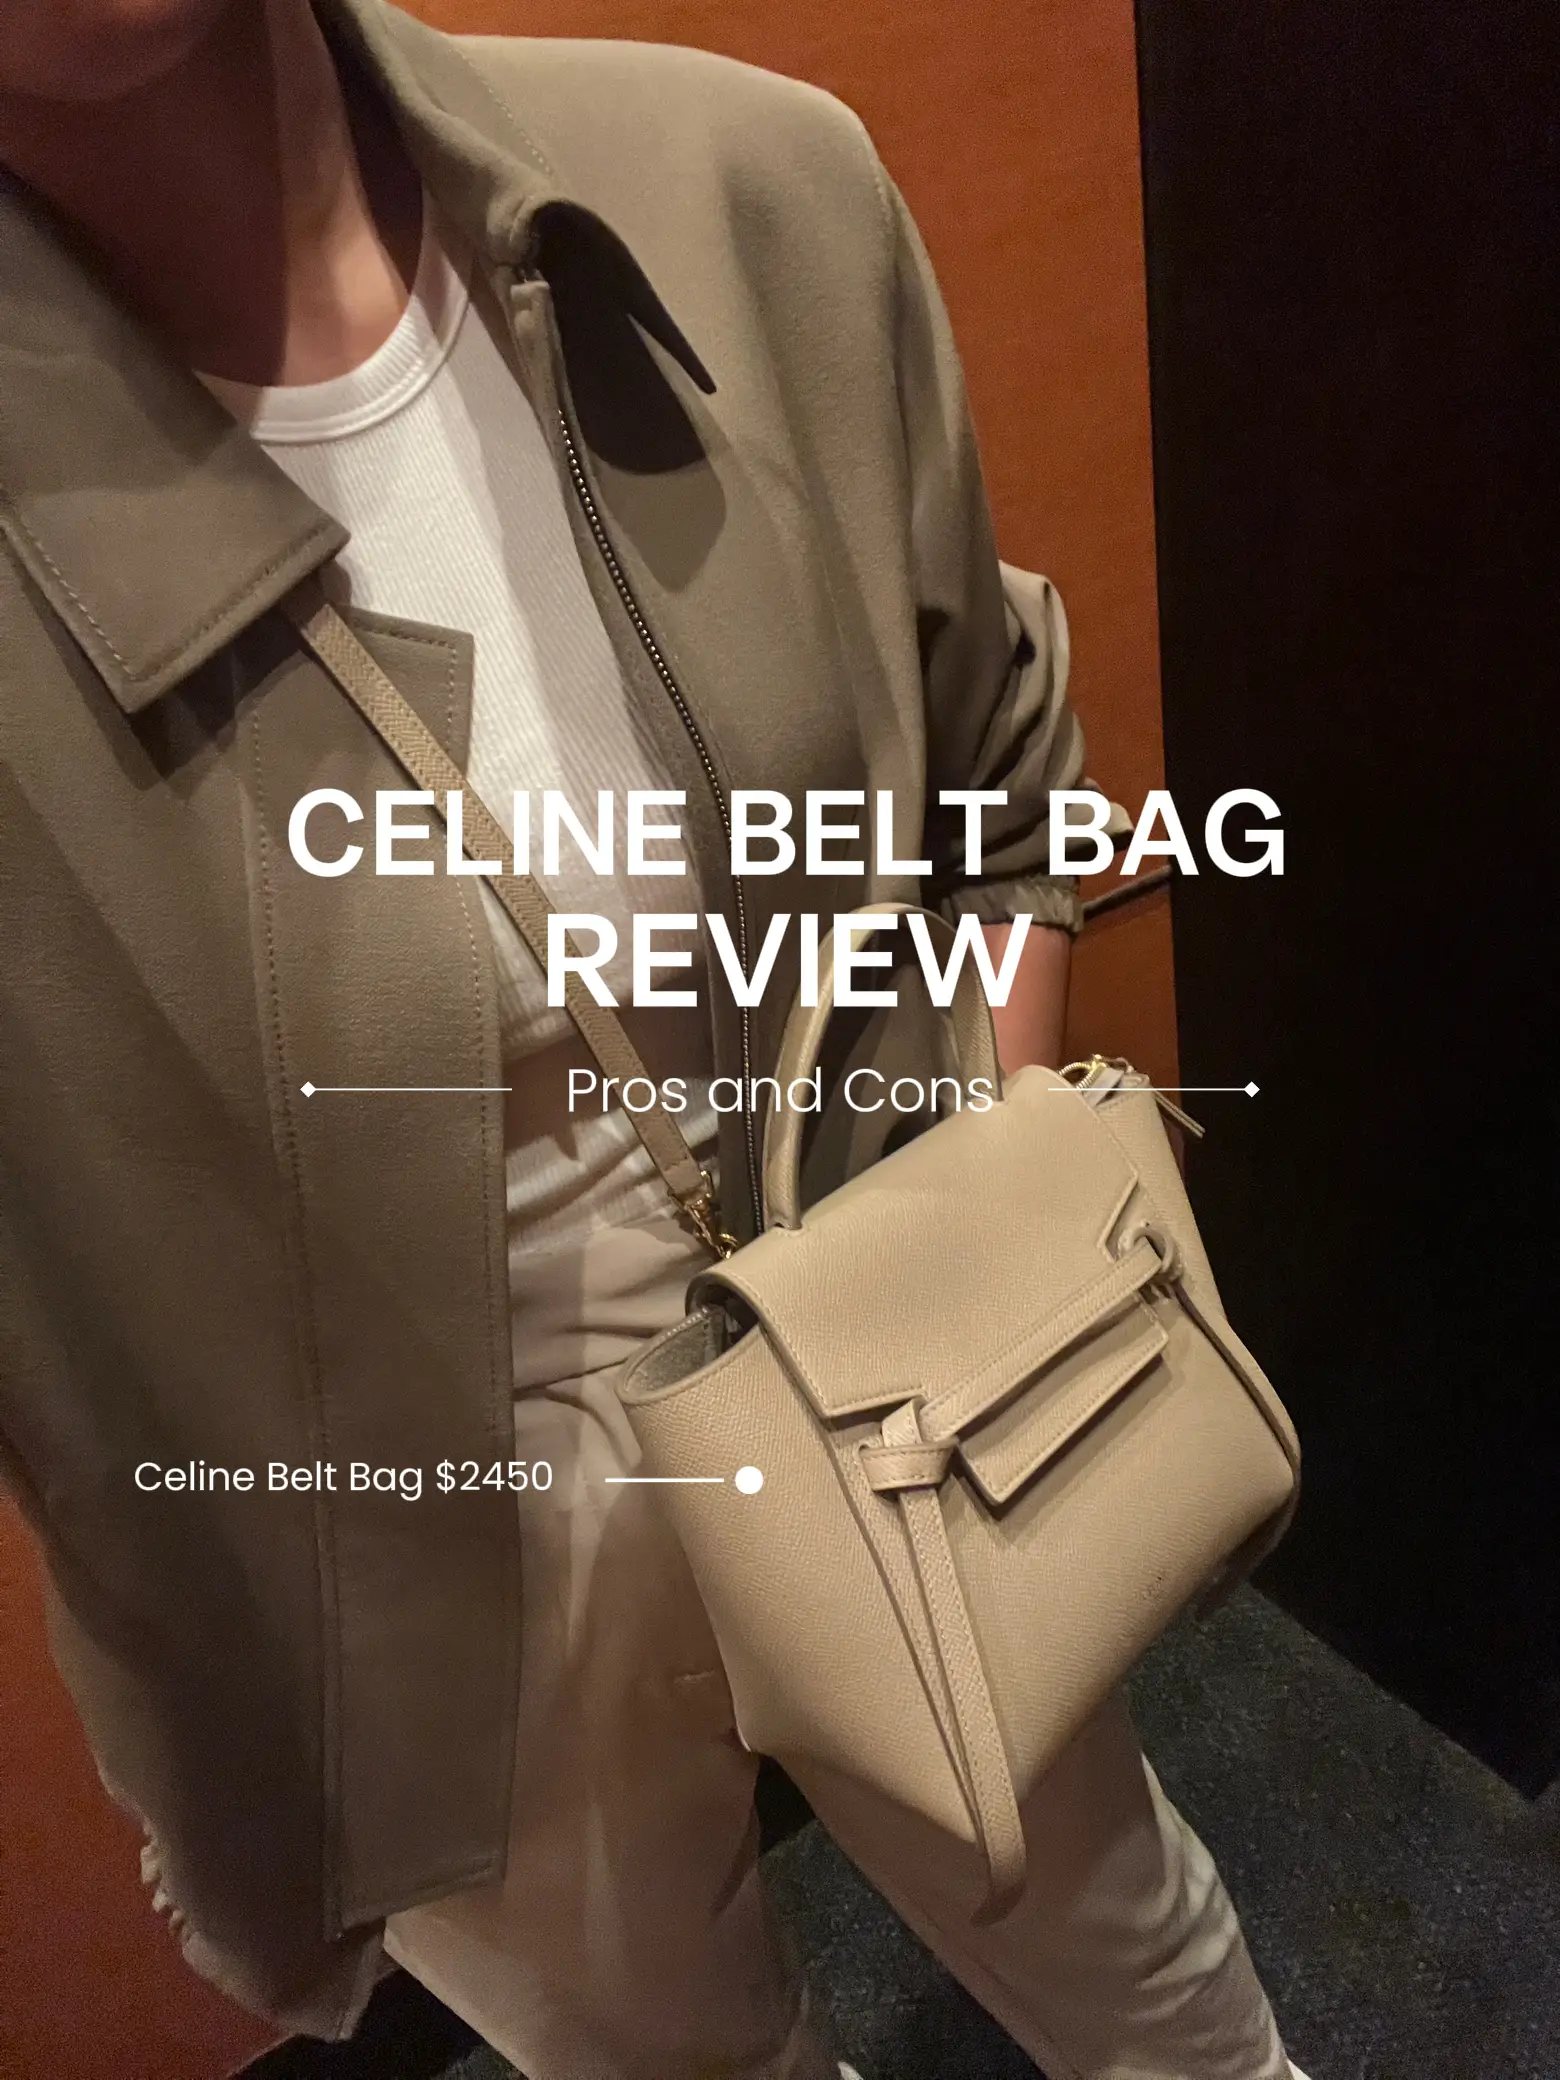 Celine Yellow Leather Nano Luggage Tote Celine | The Luxury Closet